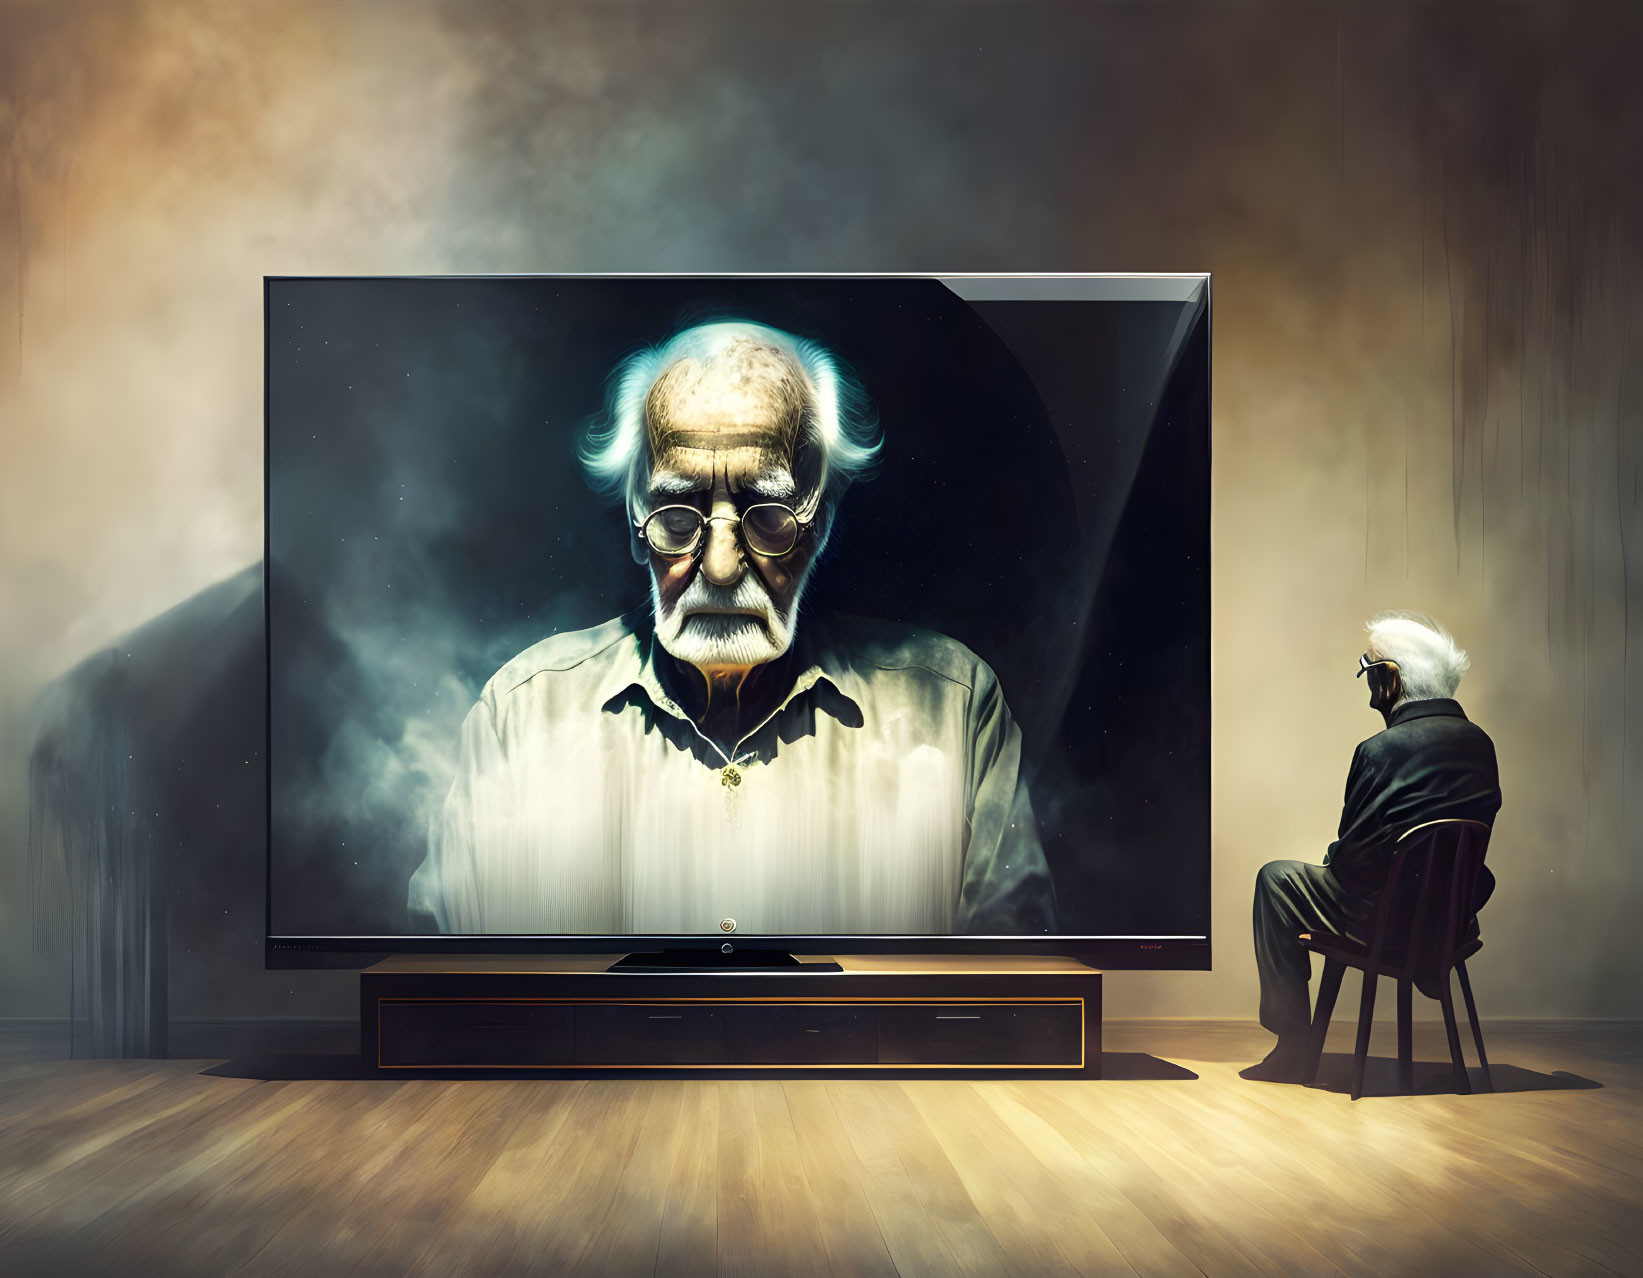 Elderly man watching himself on TV screen